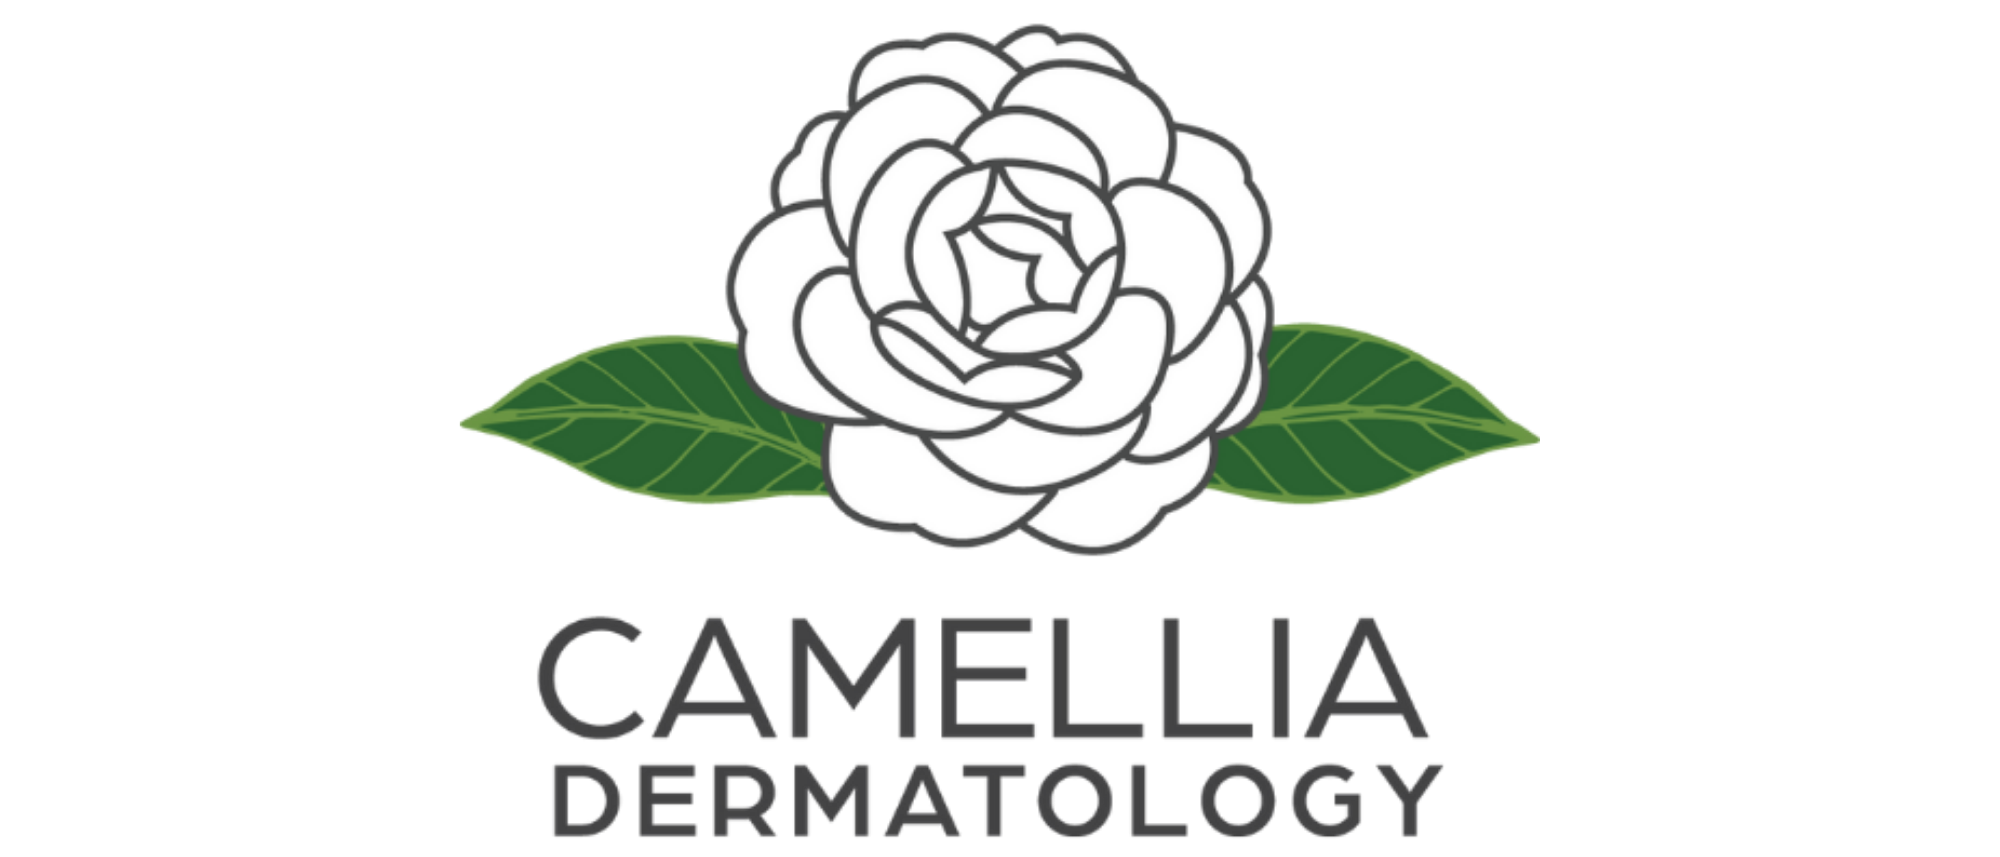 Camellia Dermatology Foley AL 